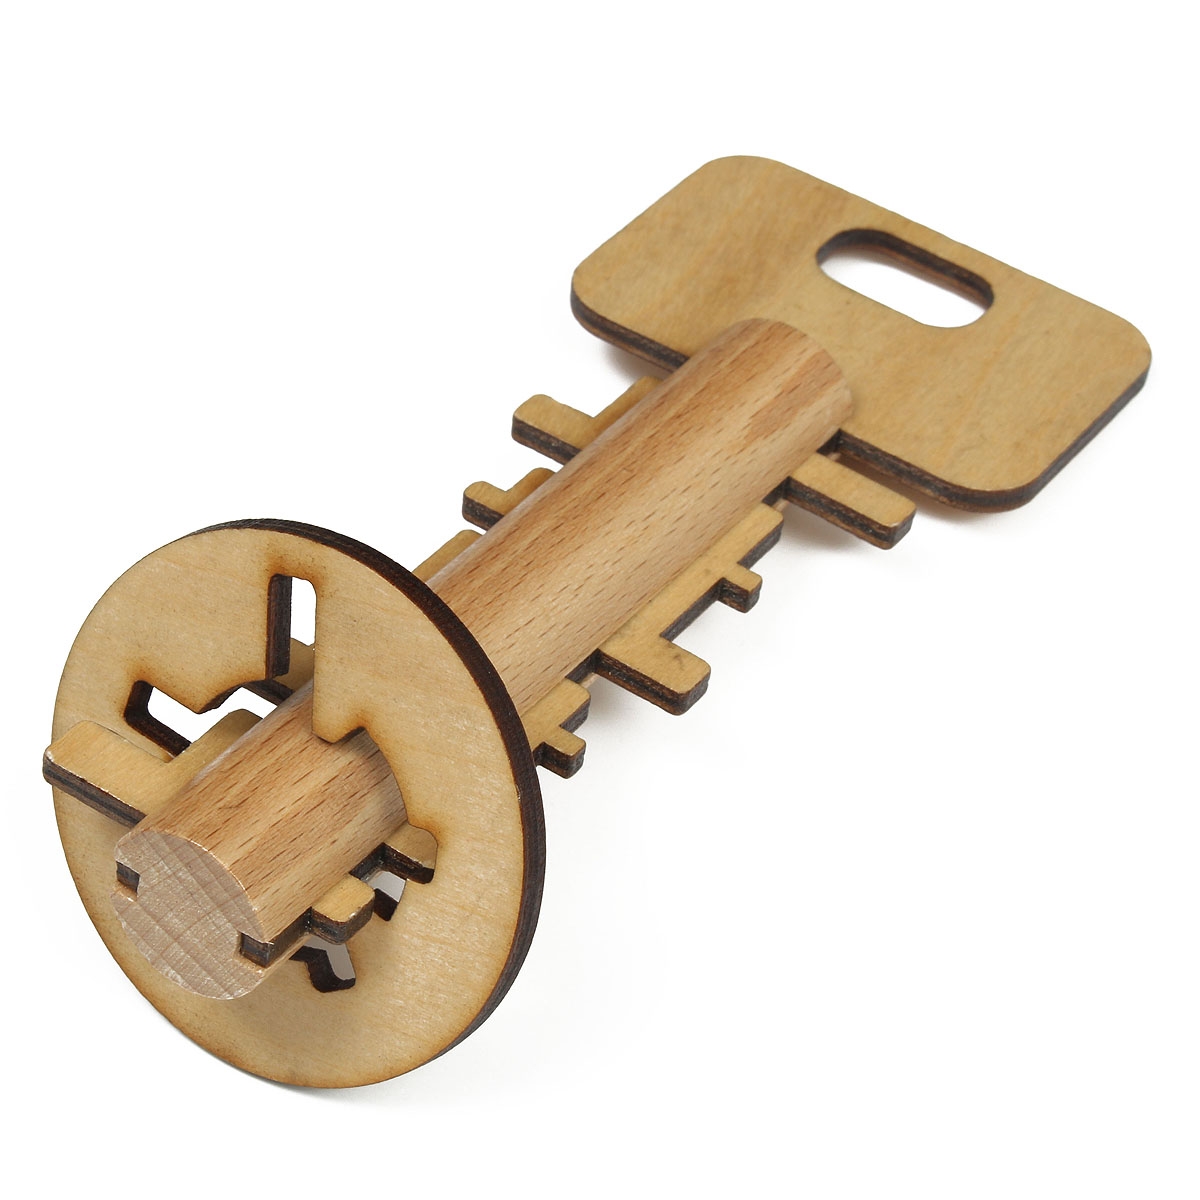 Ming Lock Luban Lock Unlocking Keys Removable Bamboo Adult Educational Toys